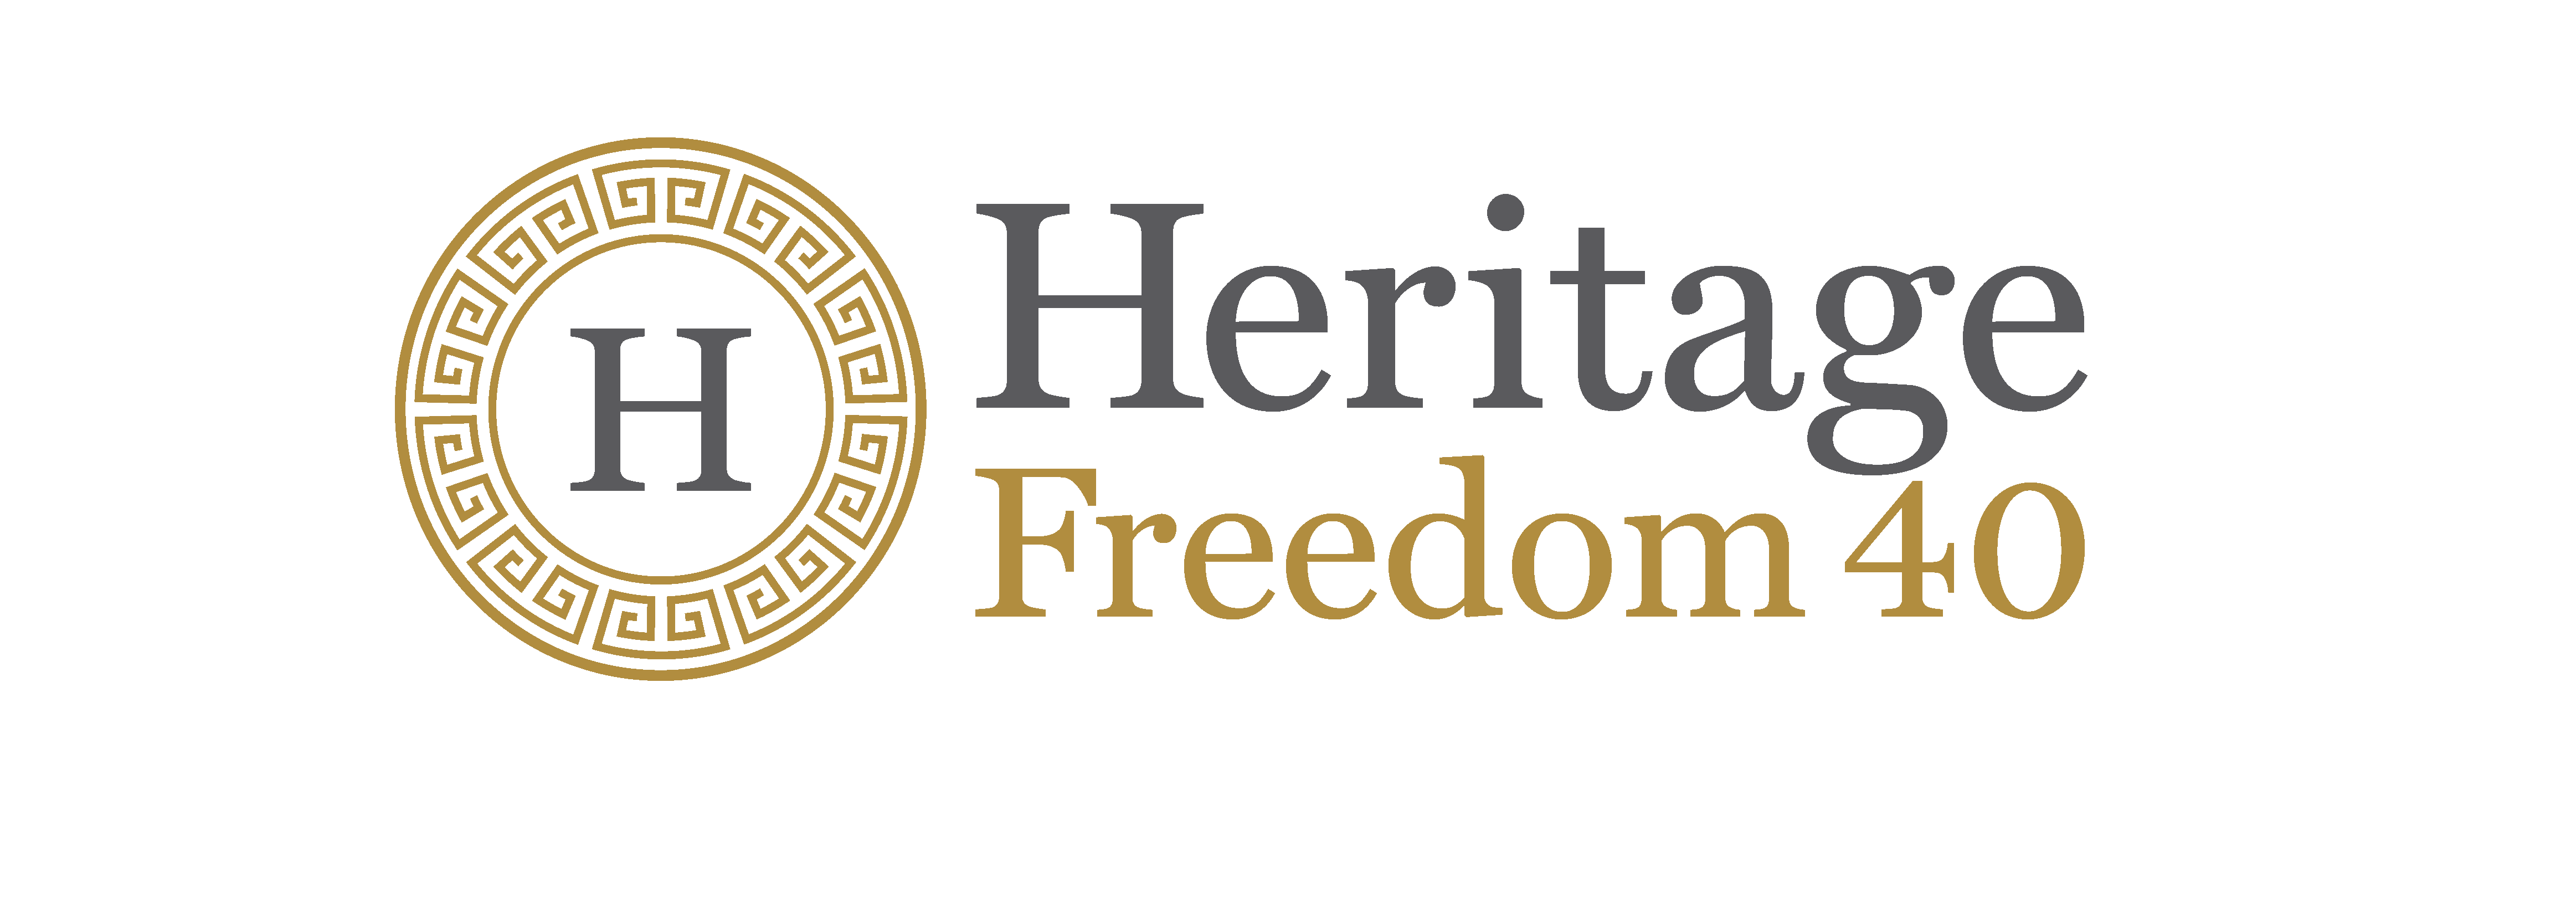 Heritage Freedom 40 Range